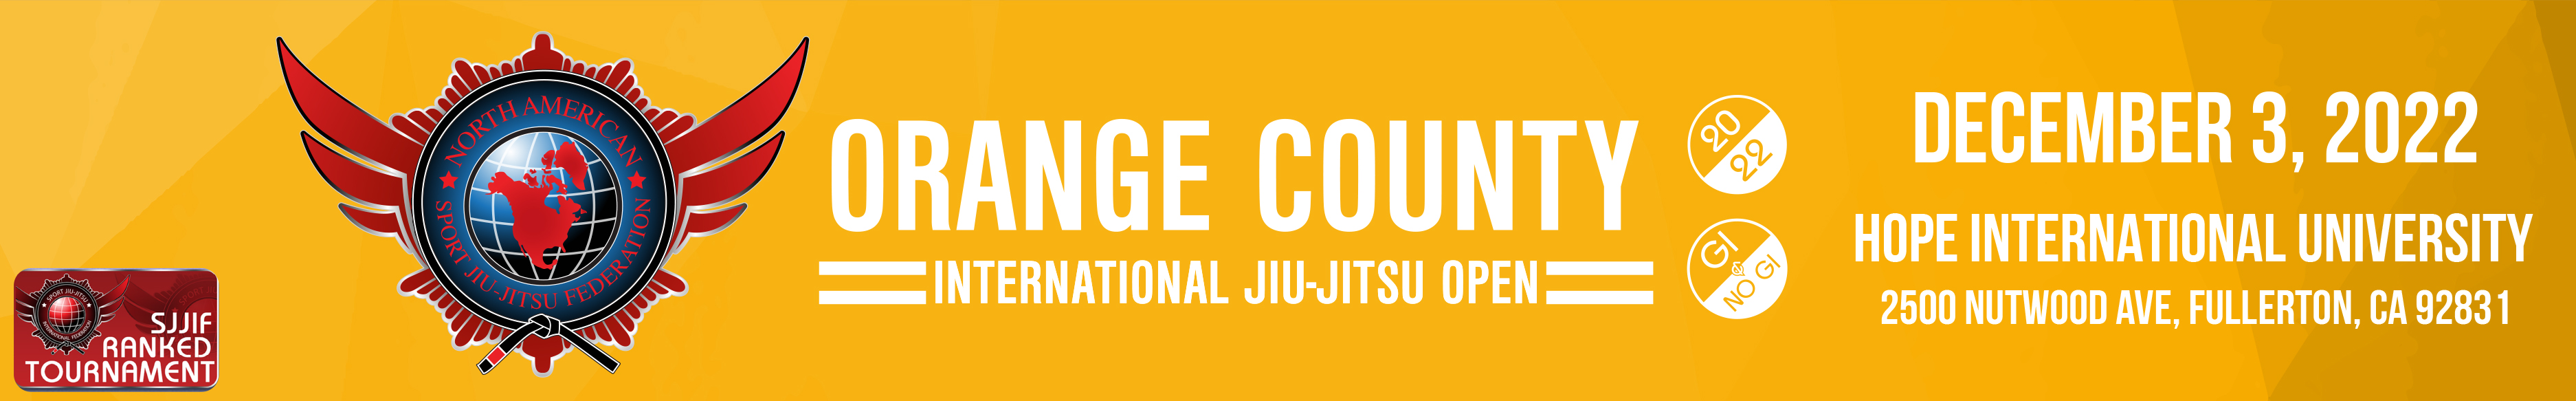 2022 orange county international jiu jitsu open